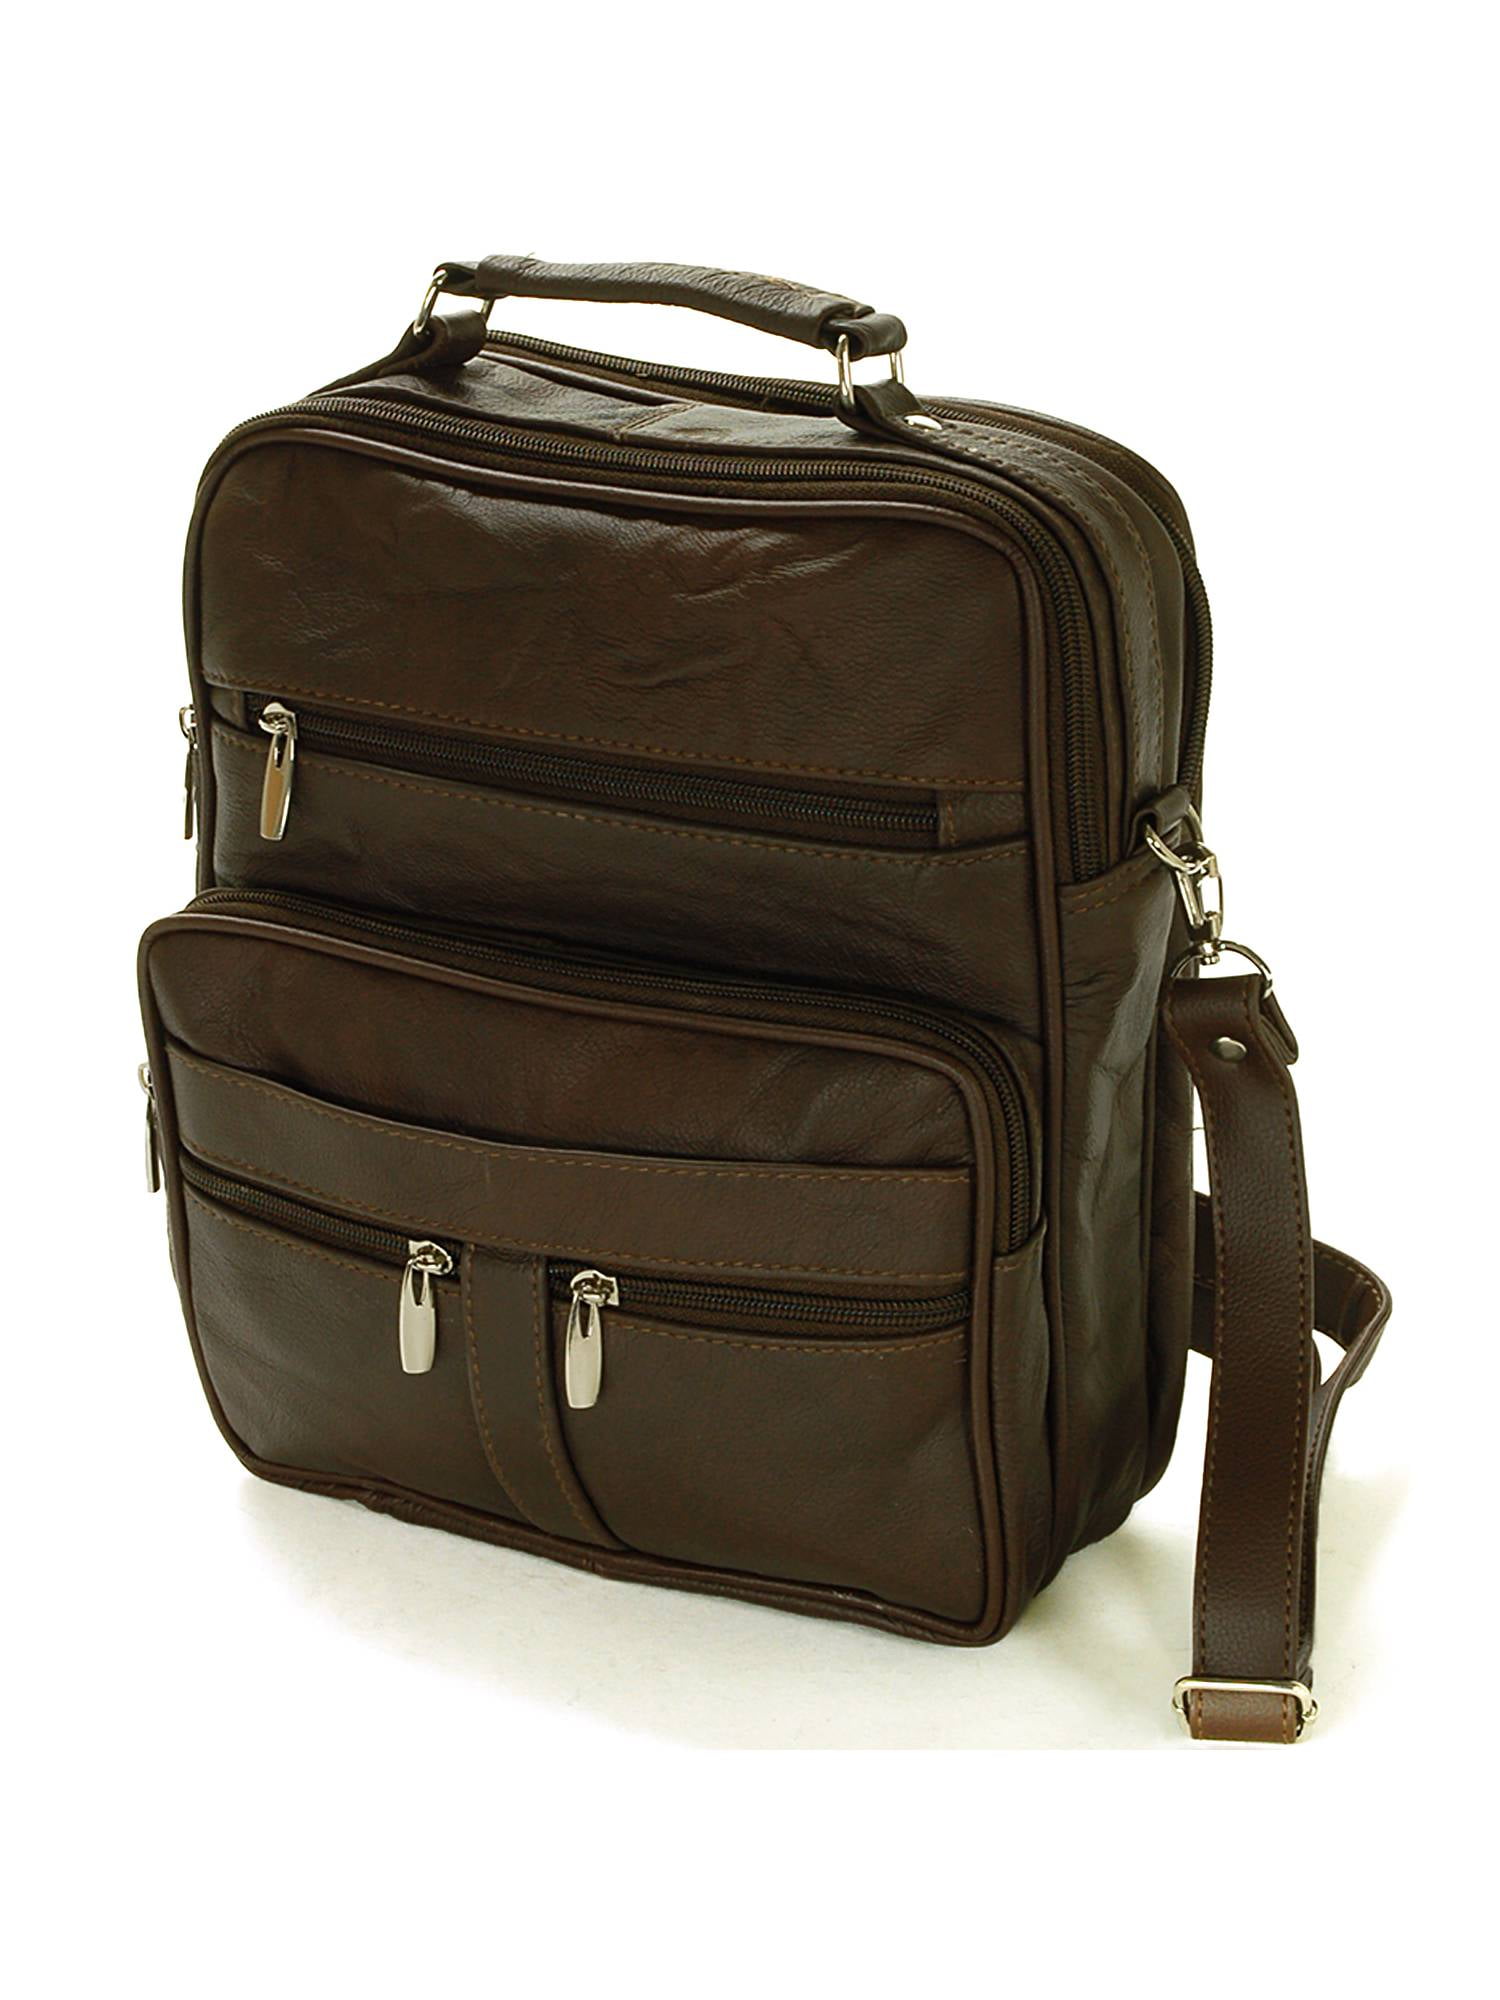 multipurpose travel organizer bag